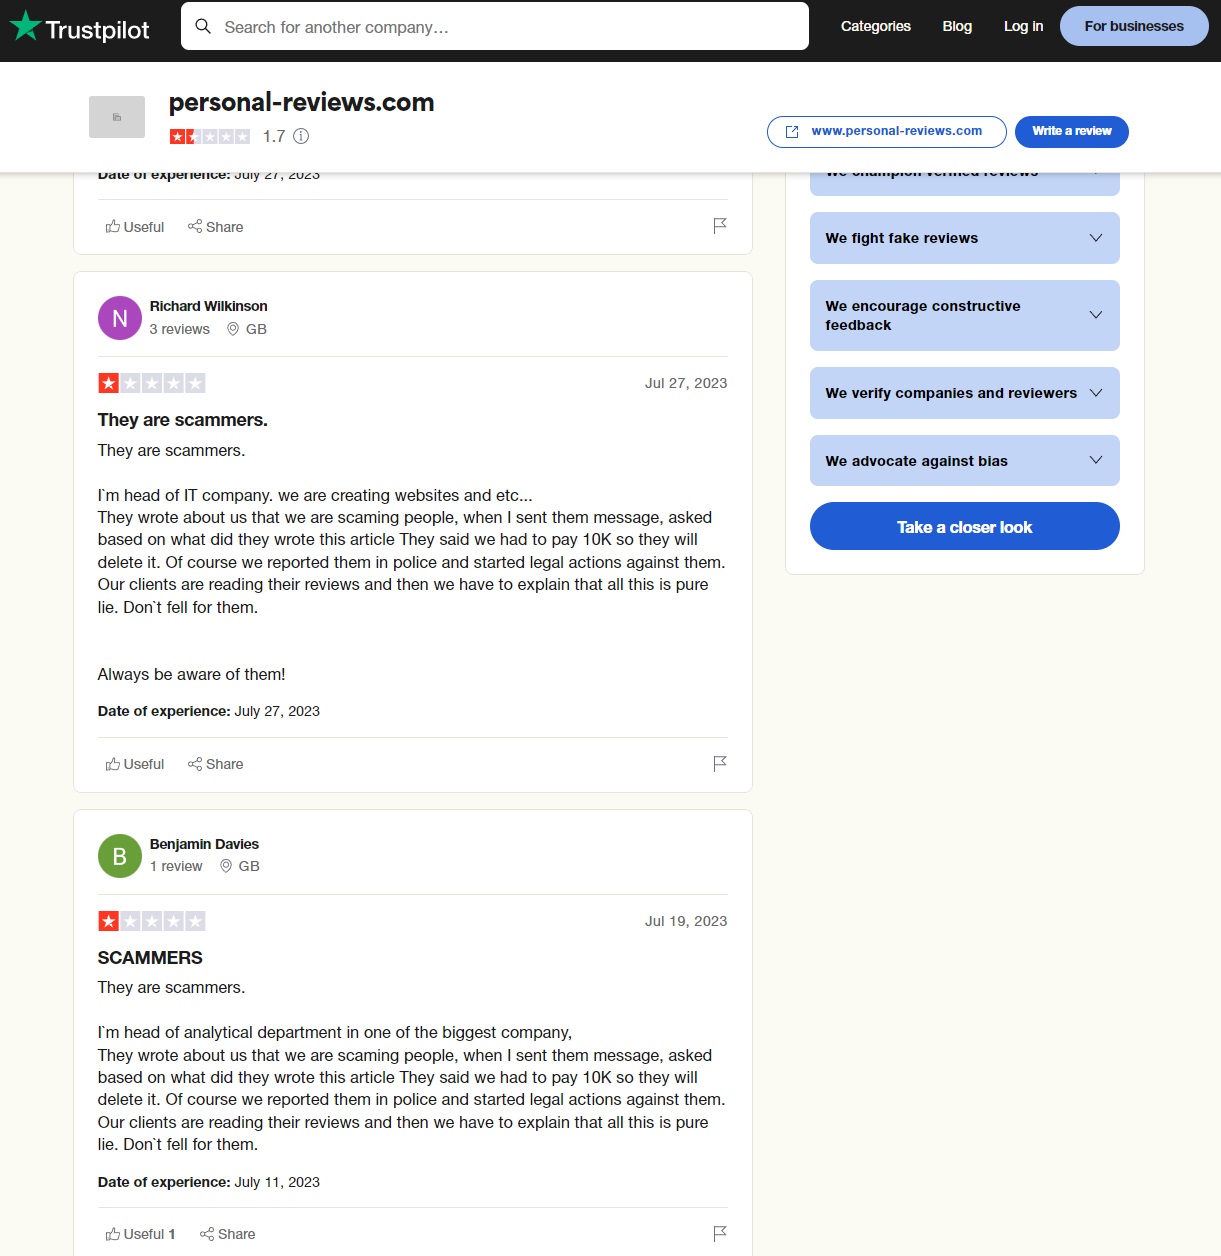 personal-reviews.com Trustpilot page